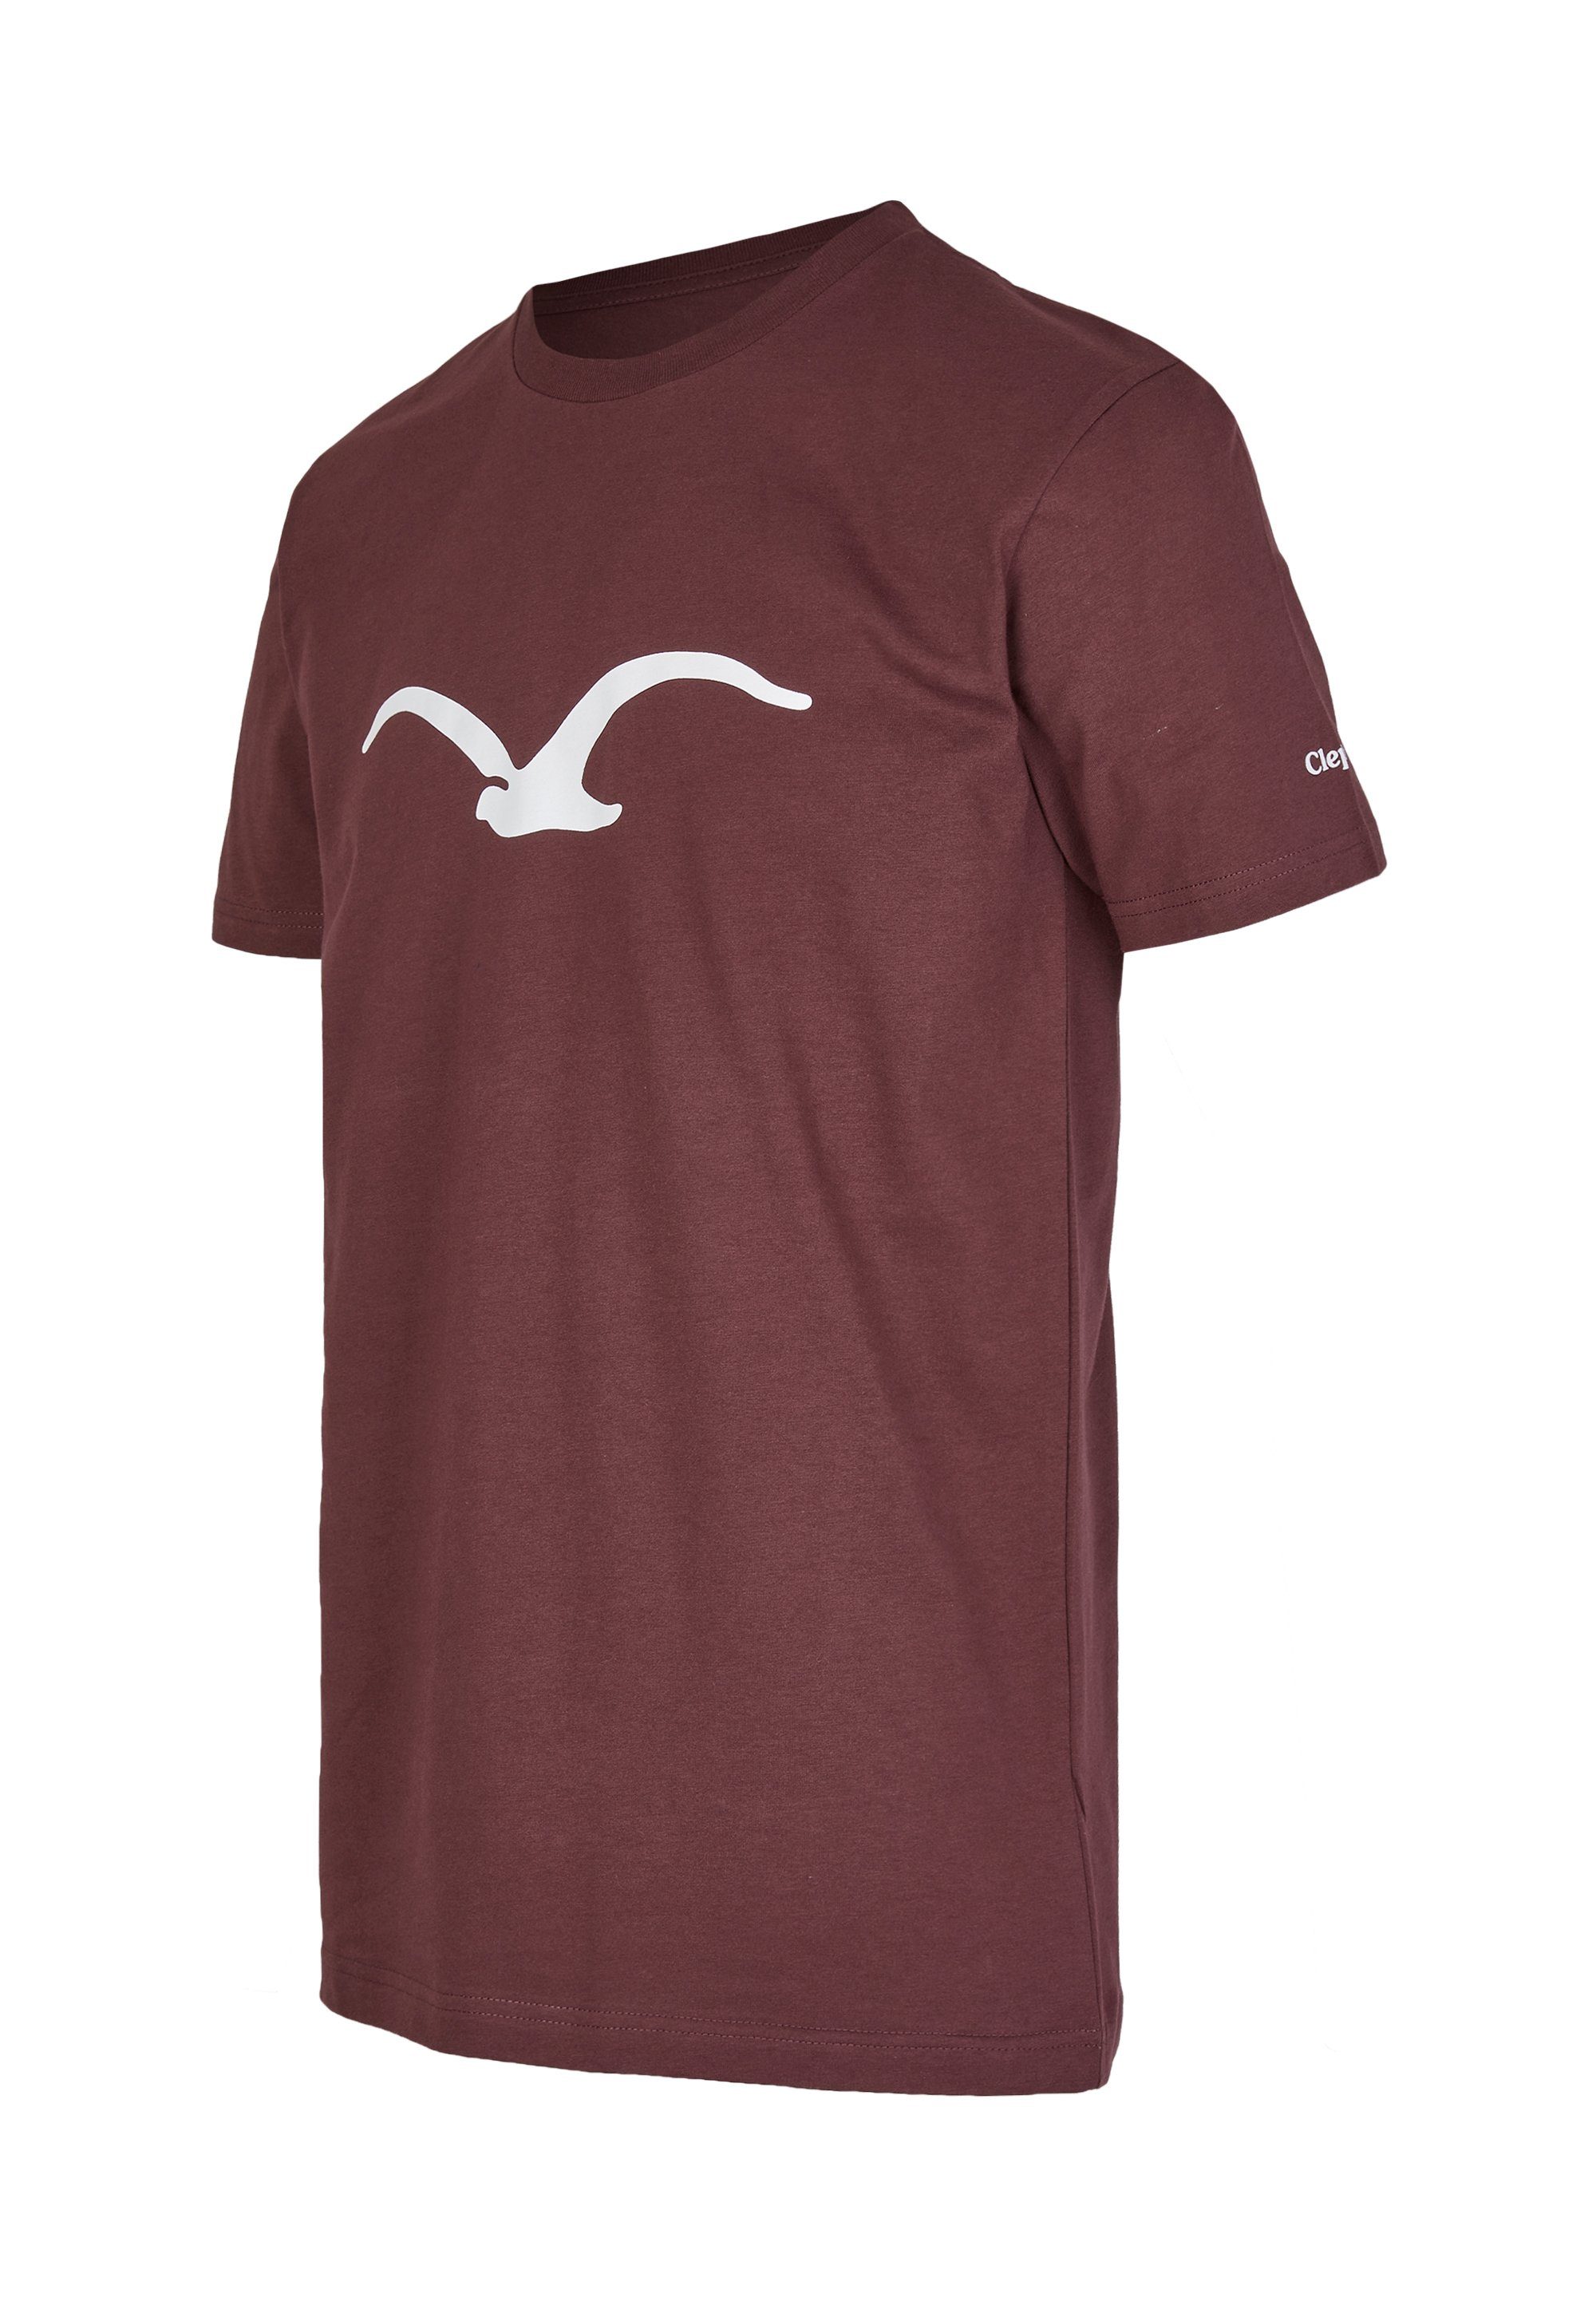 Cleptomanicx mit dunkelbraun-weiß Mowe T-Shirt Print klassischem